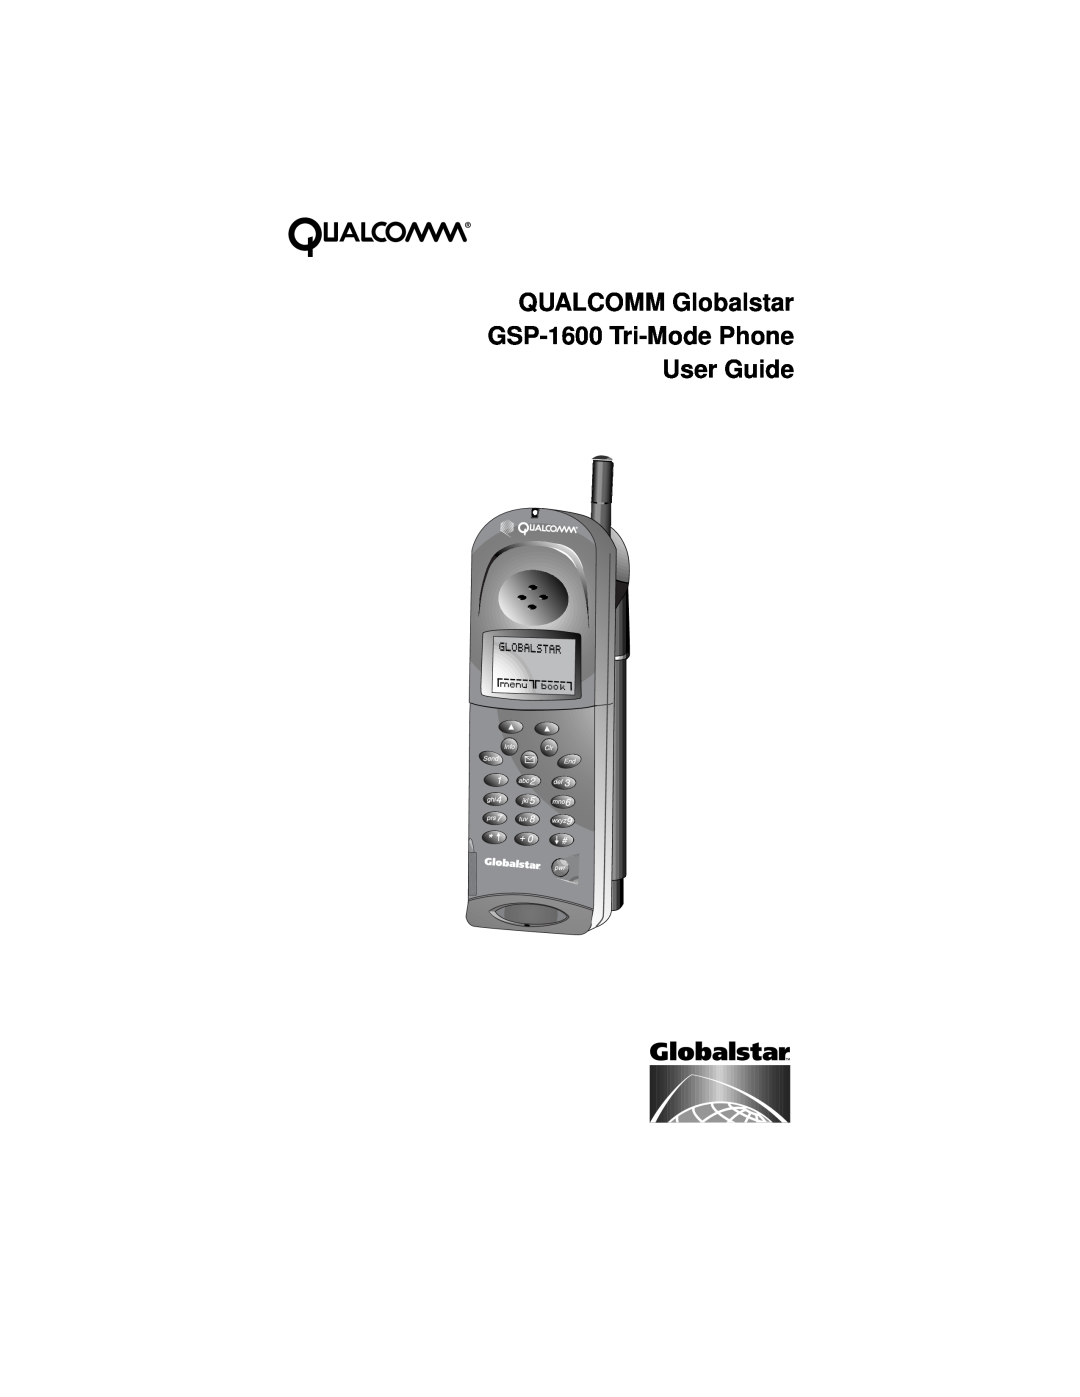 Qualcomm manual QUALCOMM Globalstar GSP-1600 Tri-Mode Phone User Guide 